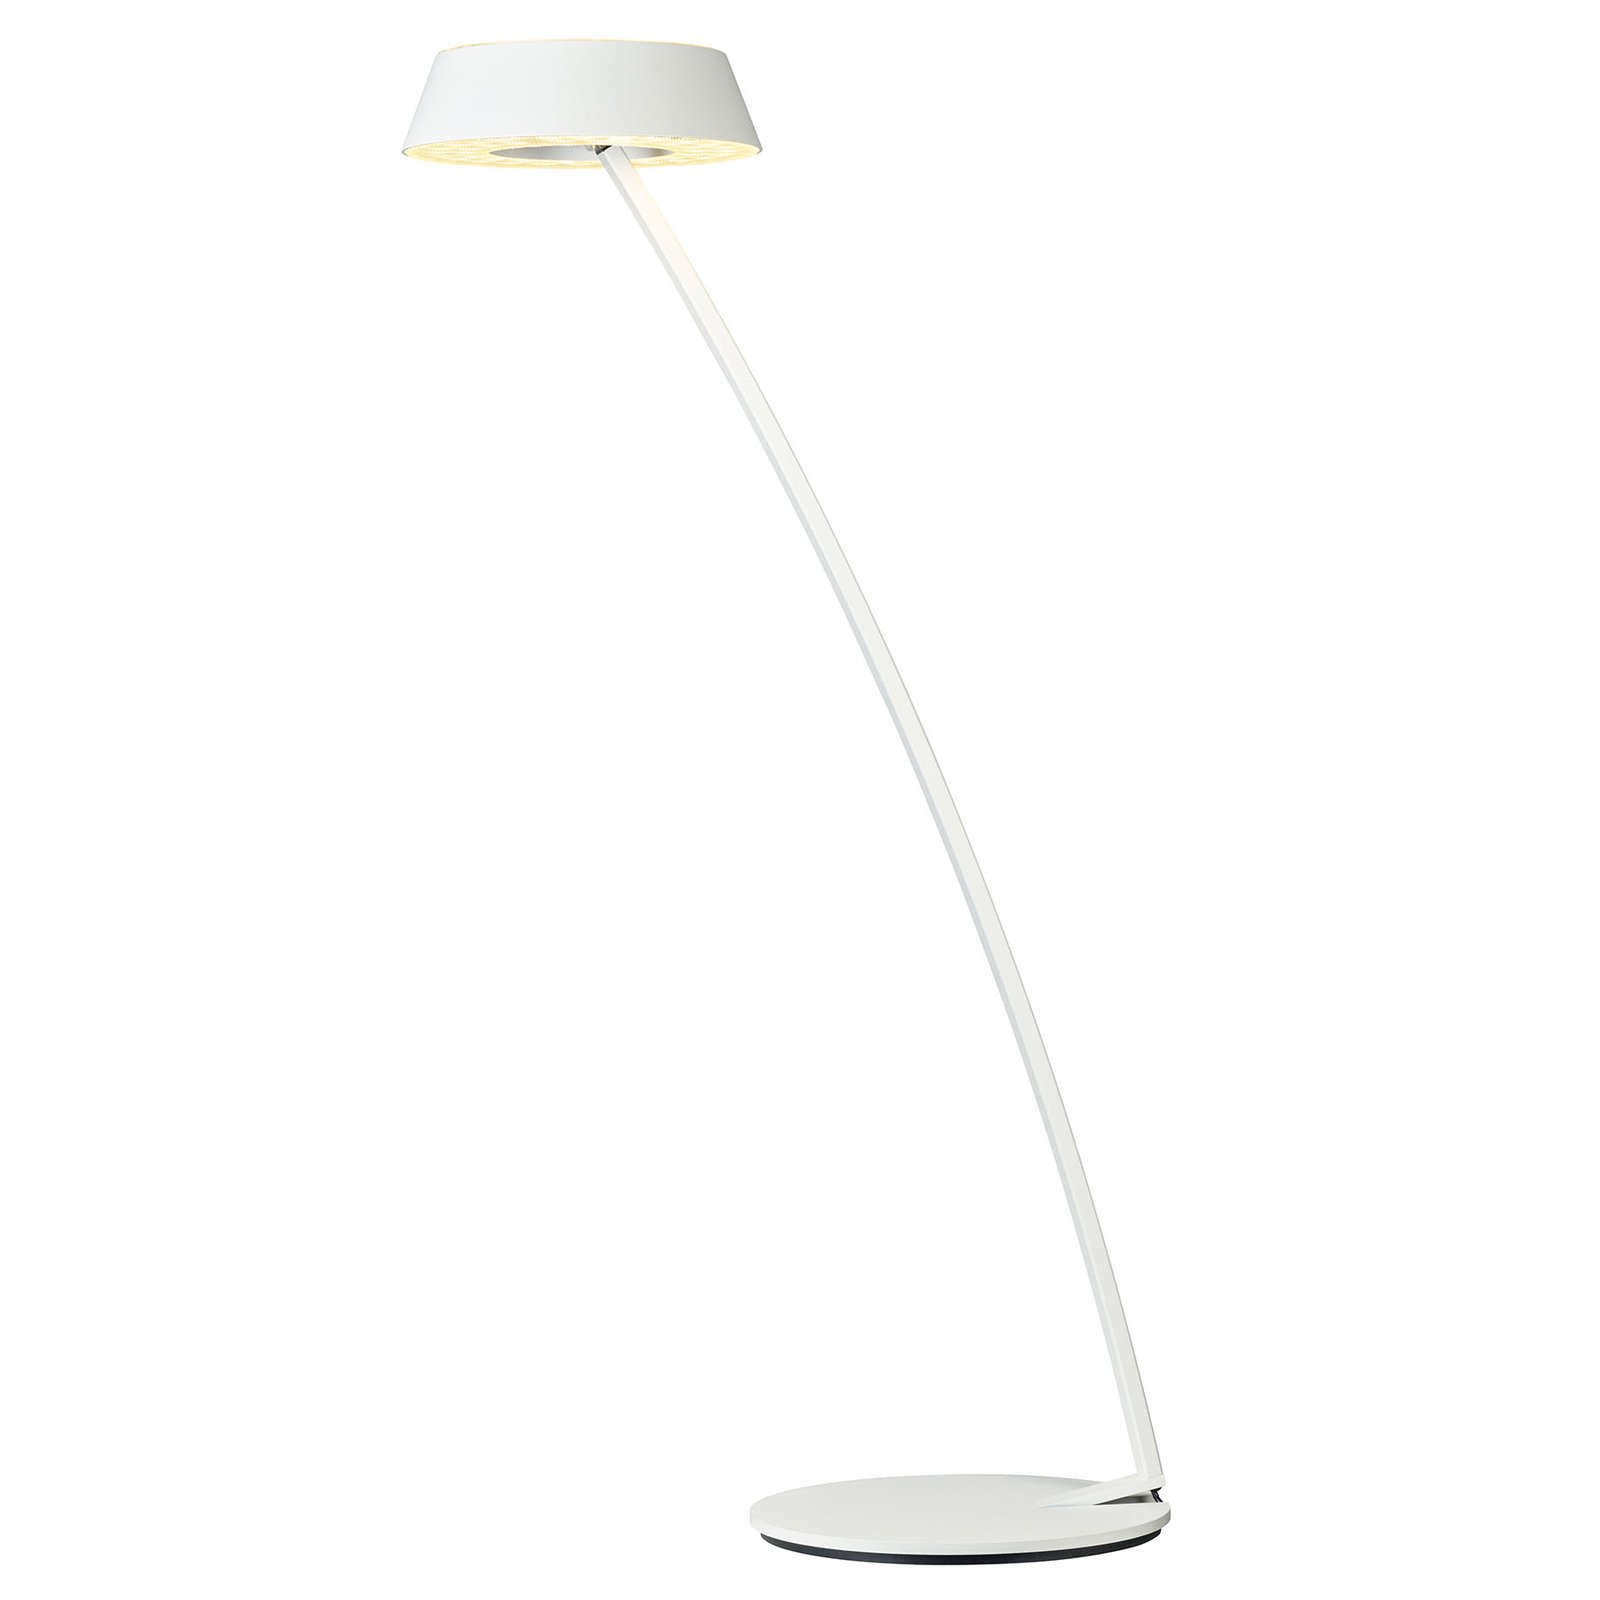 OLIGO Glance lampe à poser LED arquée blanche mate